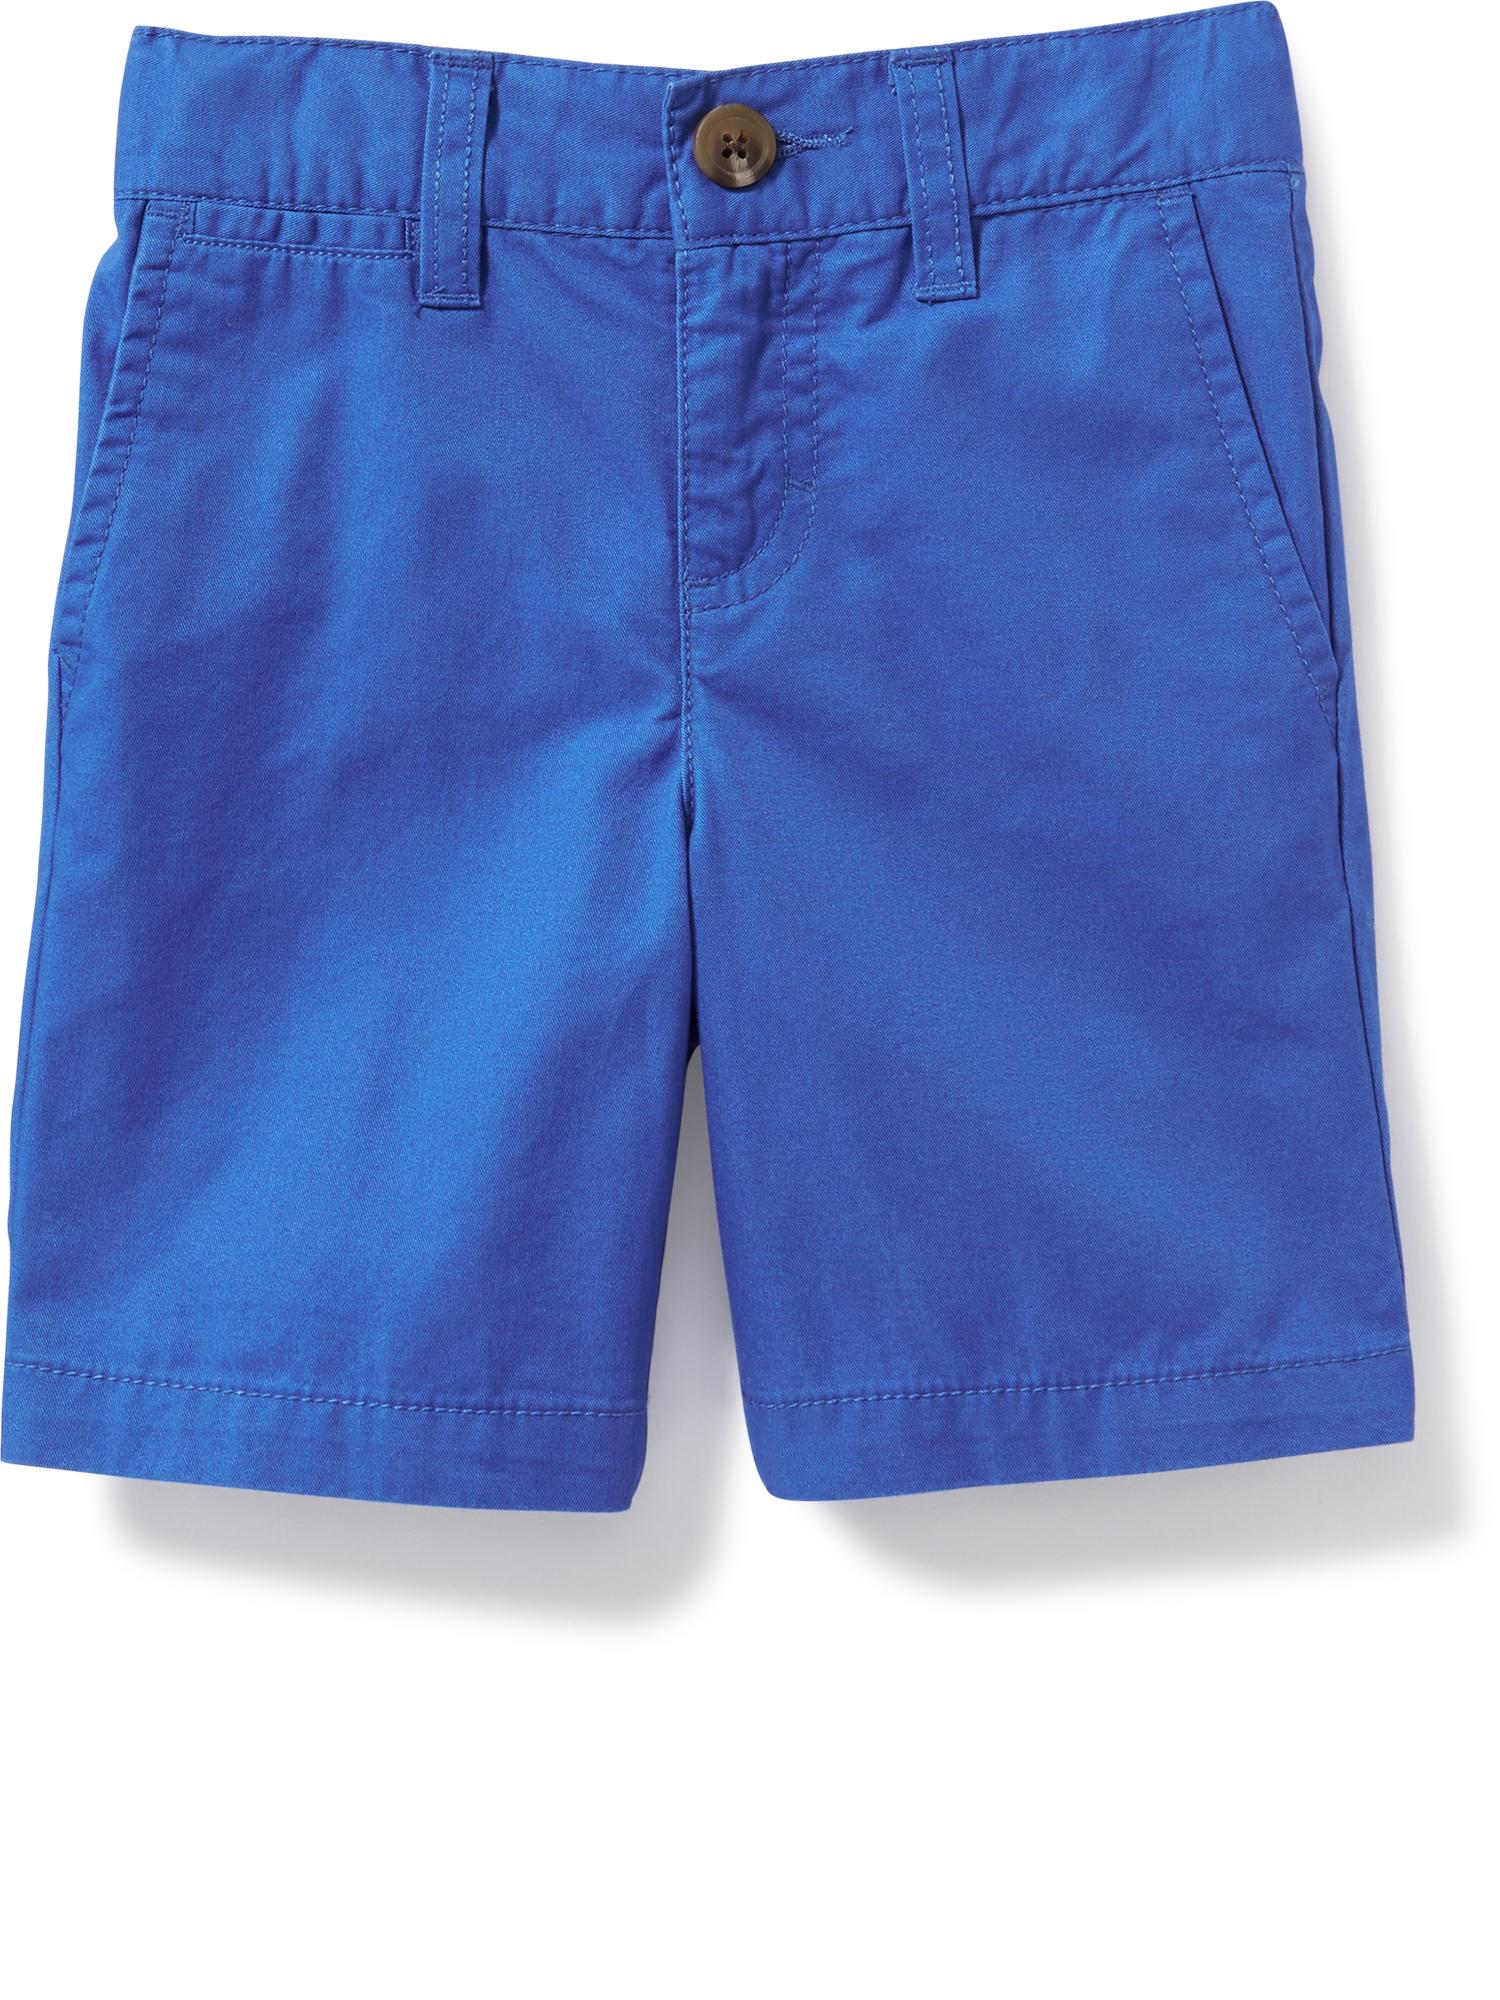 Pop-Color Khaki Shorts for Toddler Boys | Old Navy